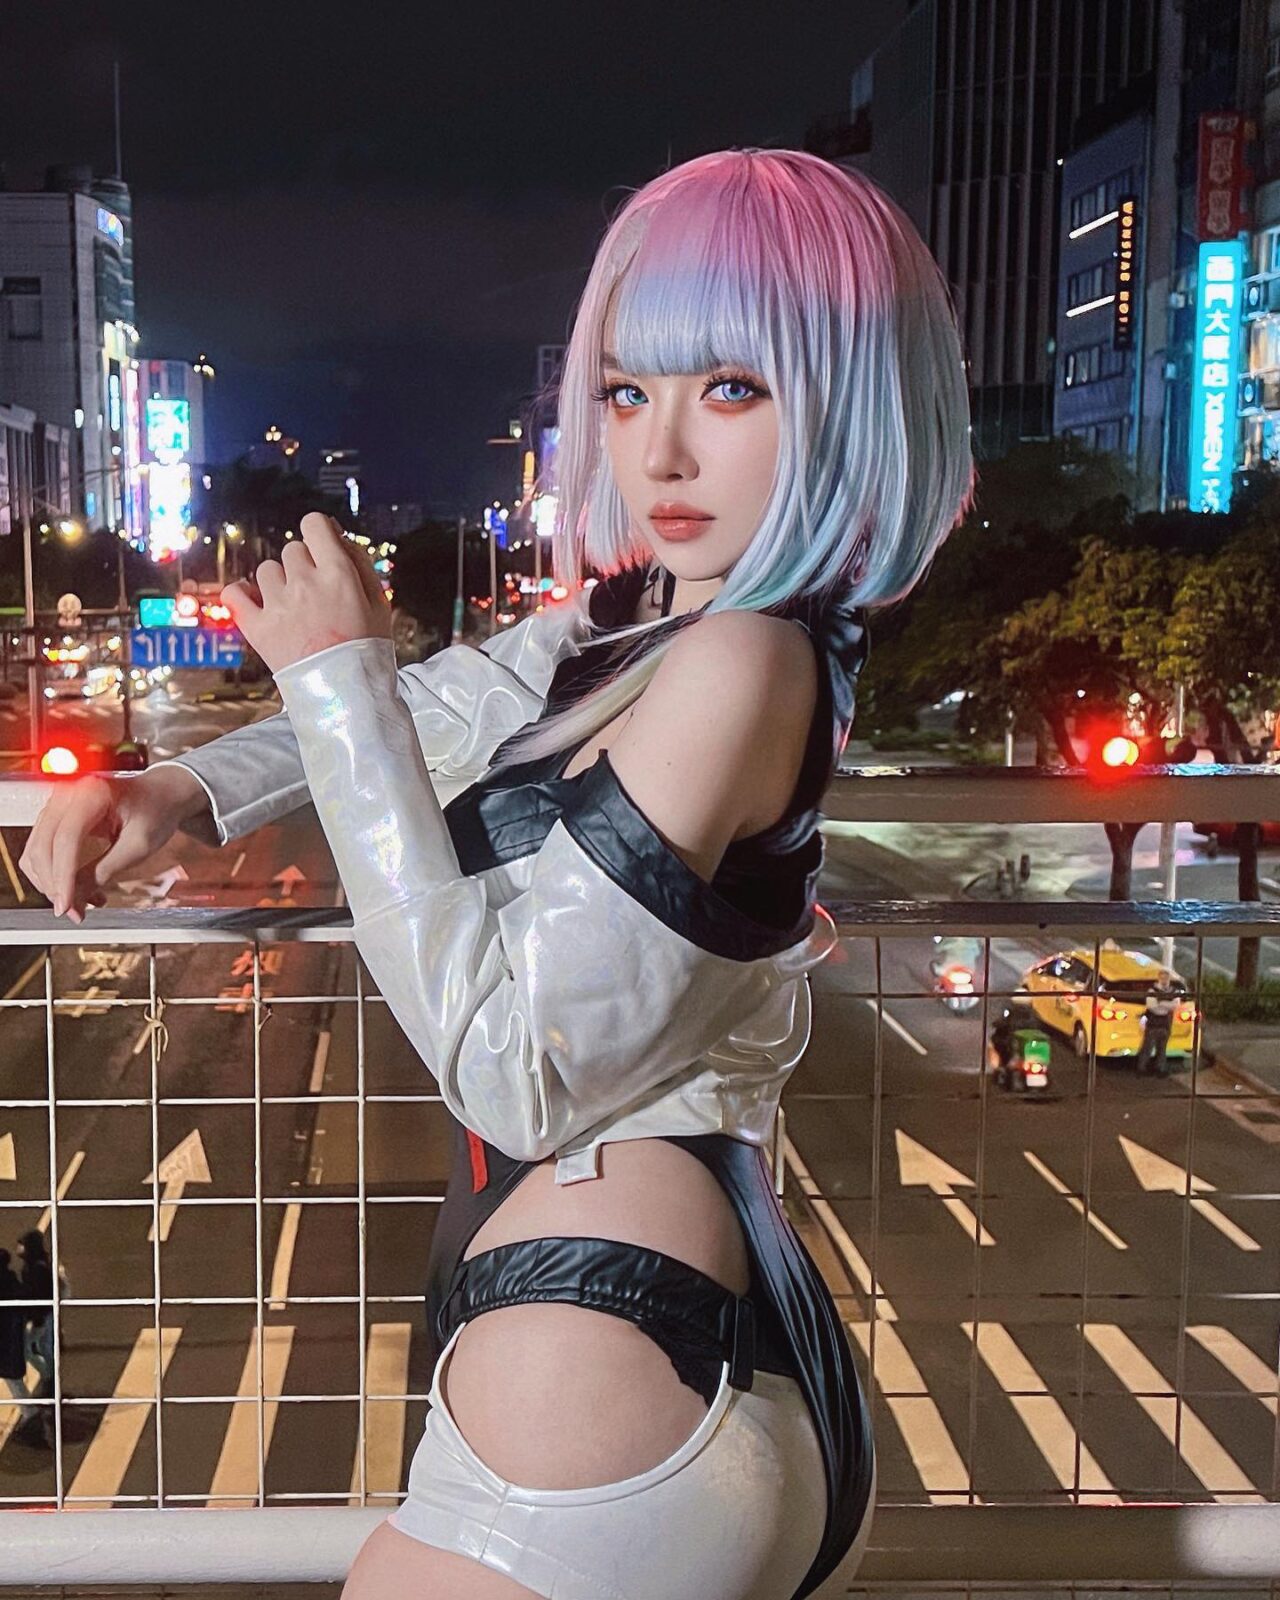 Modelo munoko_cosplay fez um lindo cosplay da Lucy de Cyberpunk